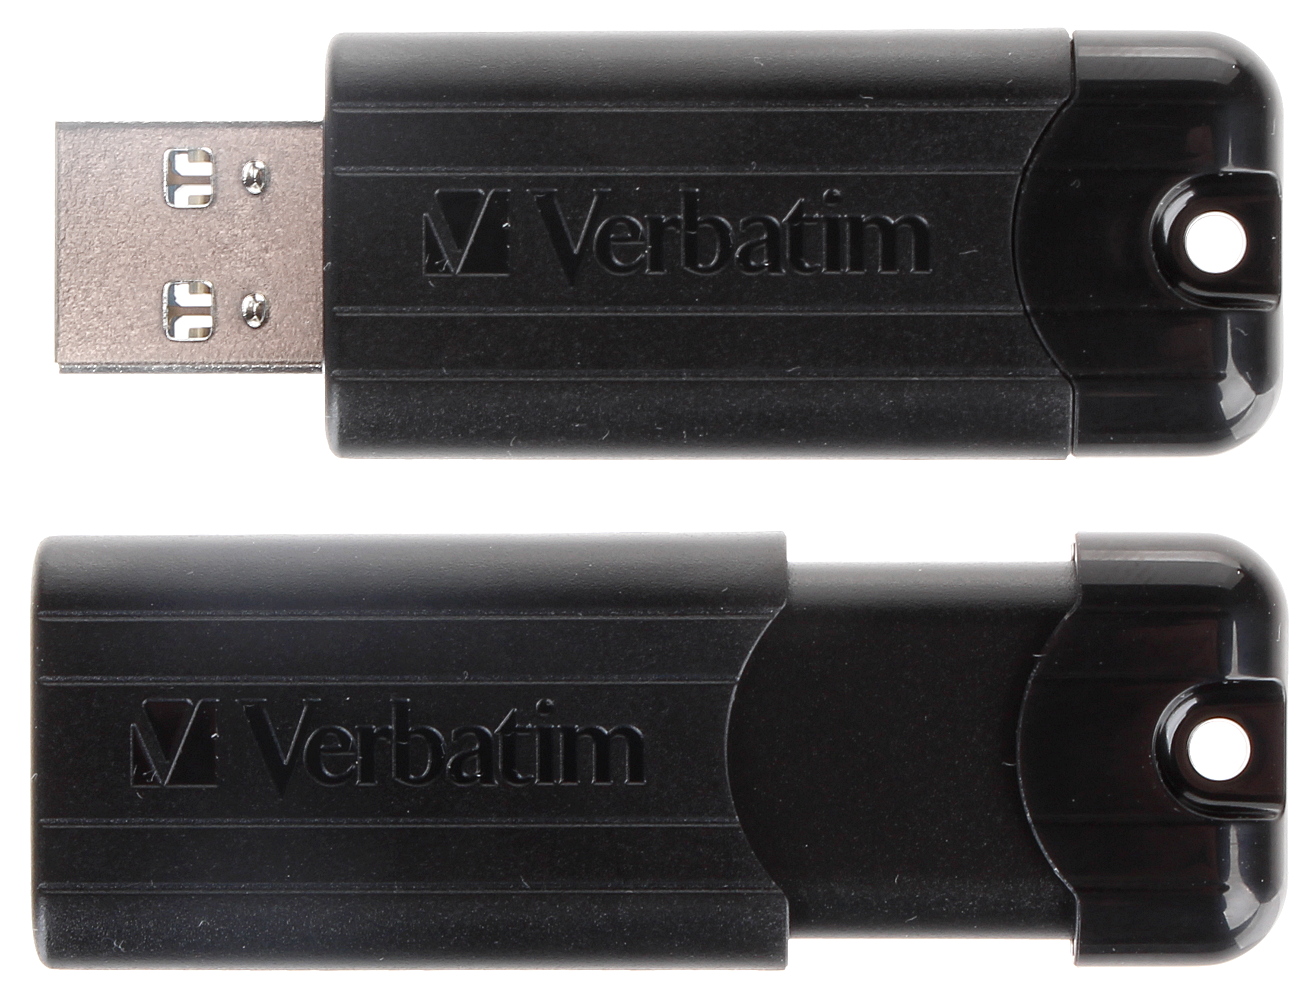 PENDRIVE USB 3.0 FD-32/49317-VERB 32 GB USB 3.0 VERBATIM - Flash Drives and  Memory Cards - Delta